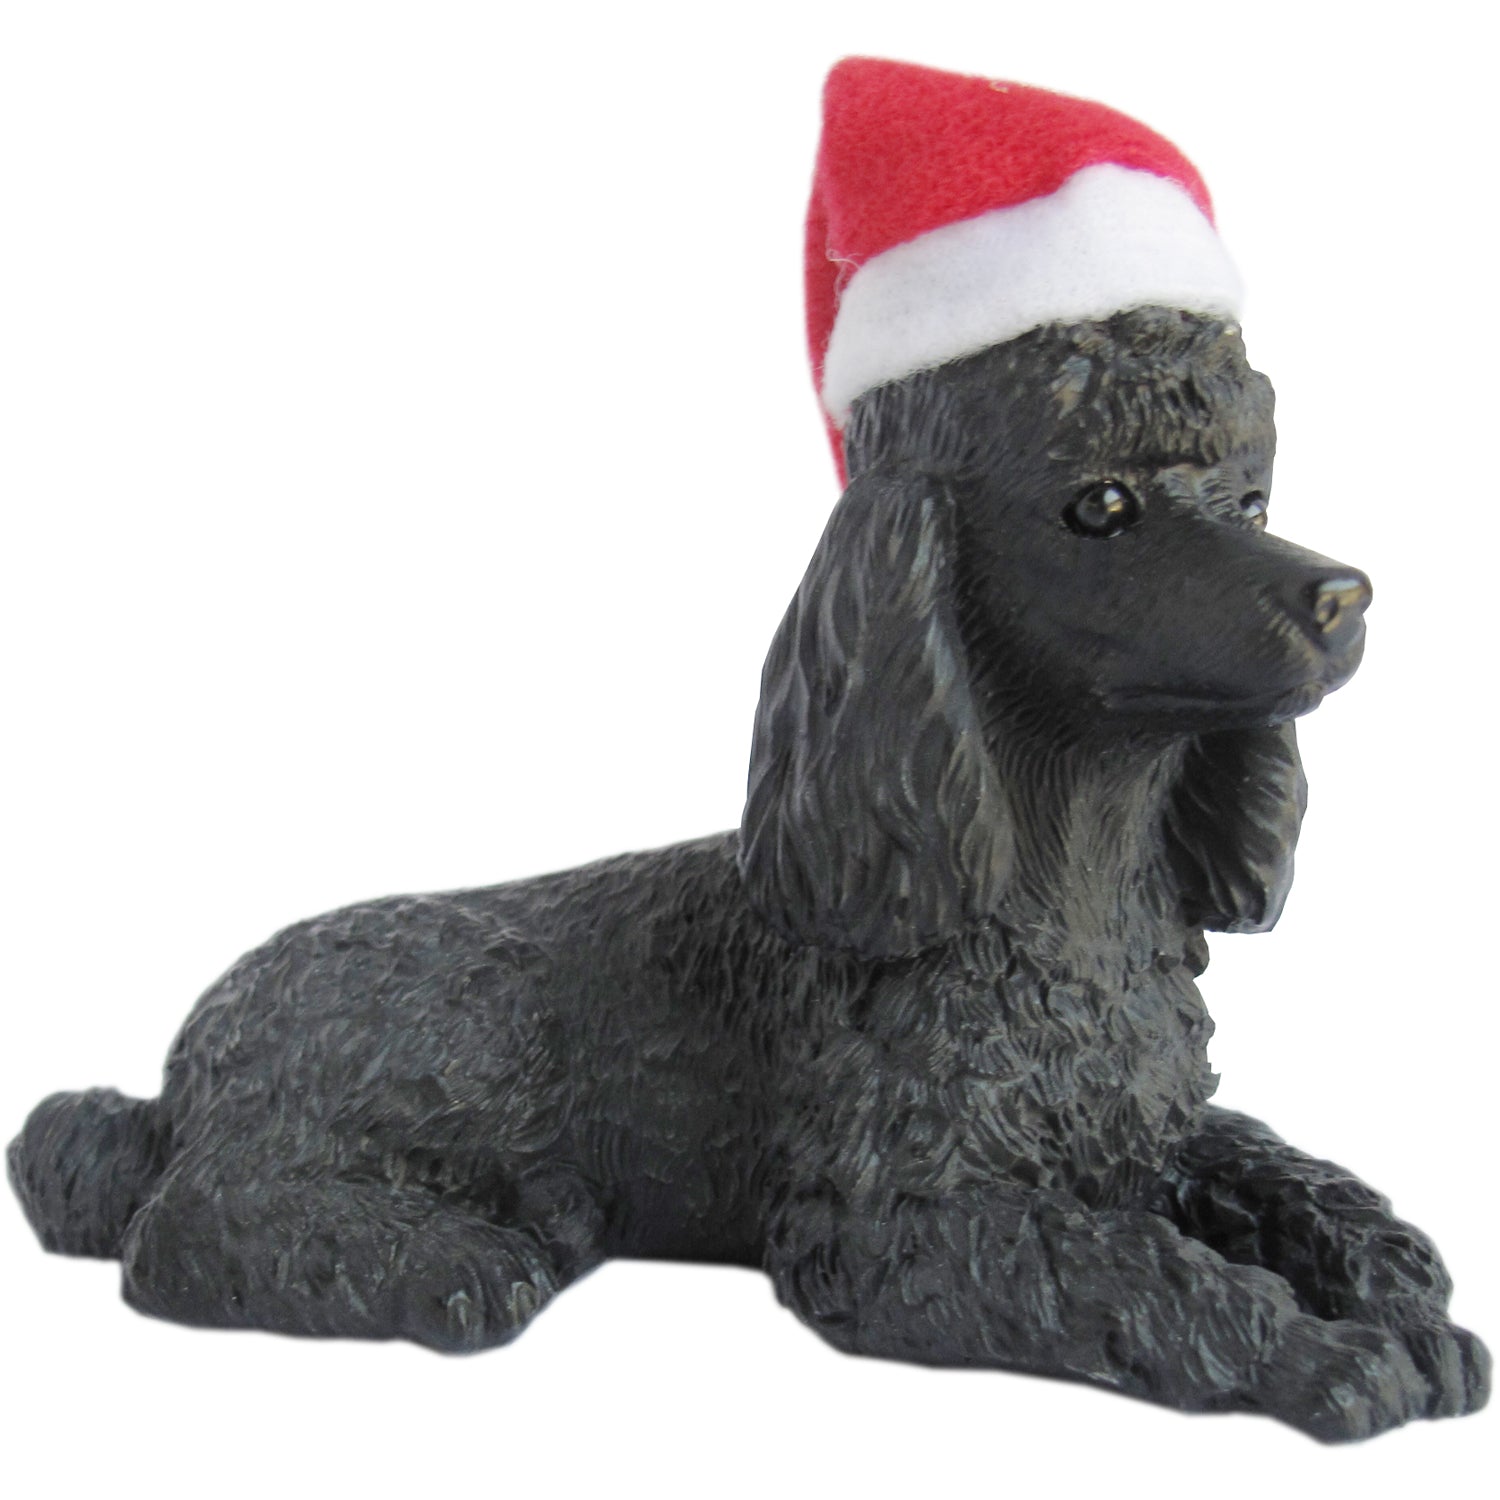 Sandicast Sitting Black Poodle Christmas Tree Ornament